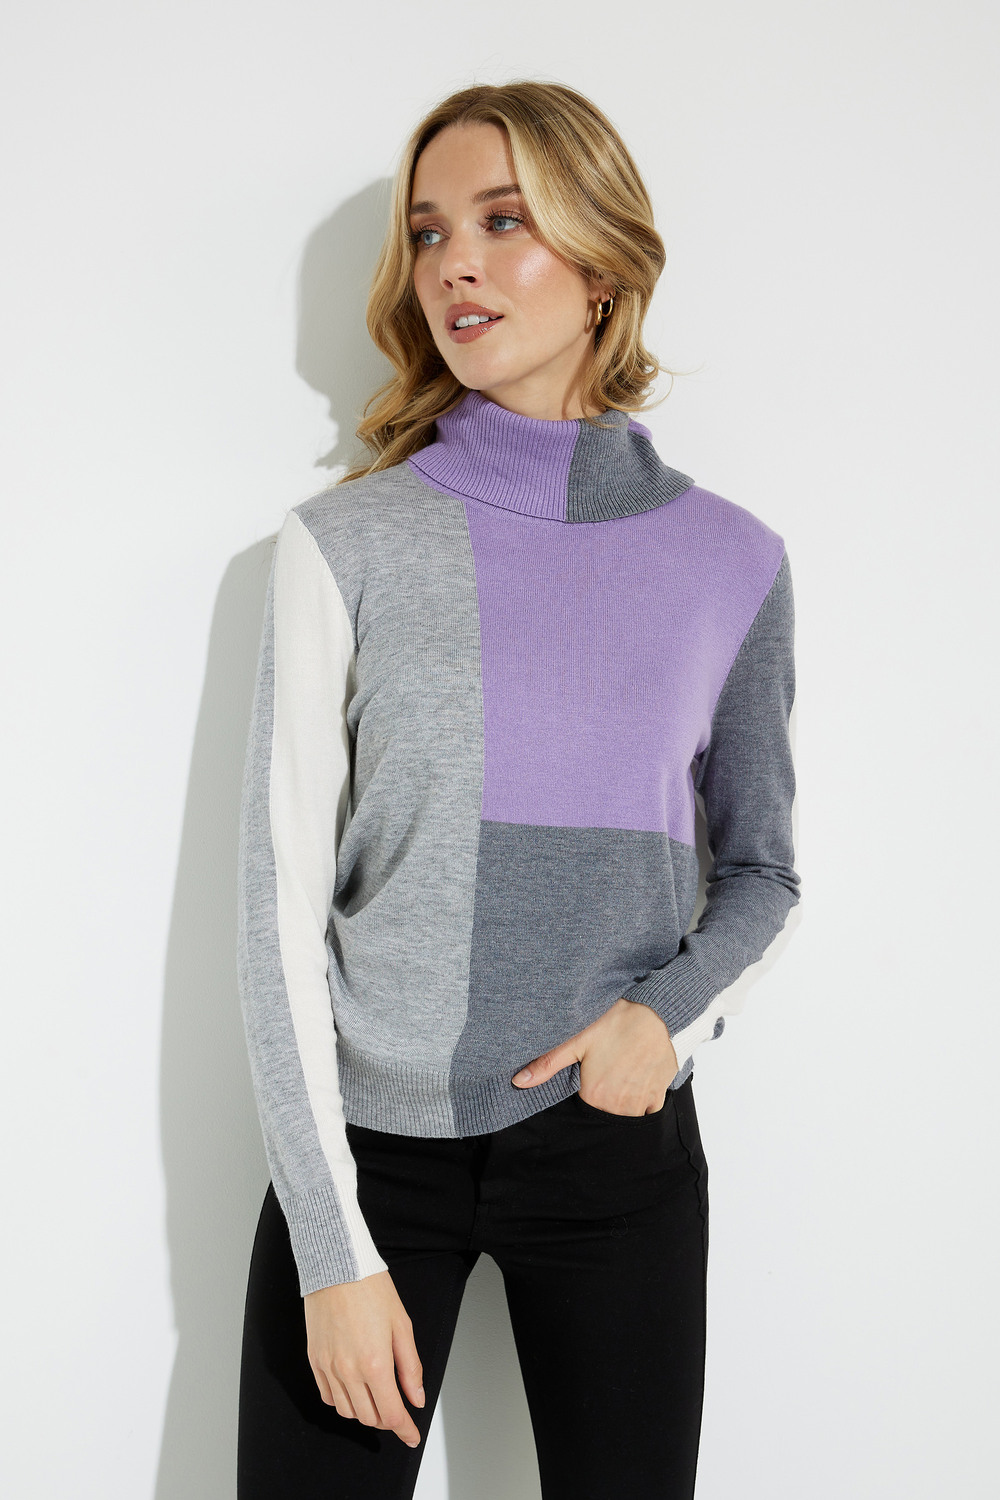 Colour-Block Sweater Style A40220. Multi